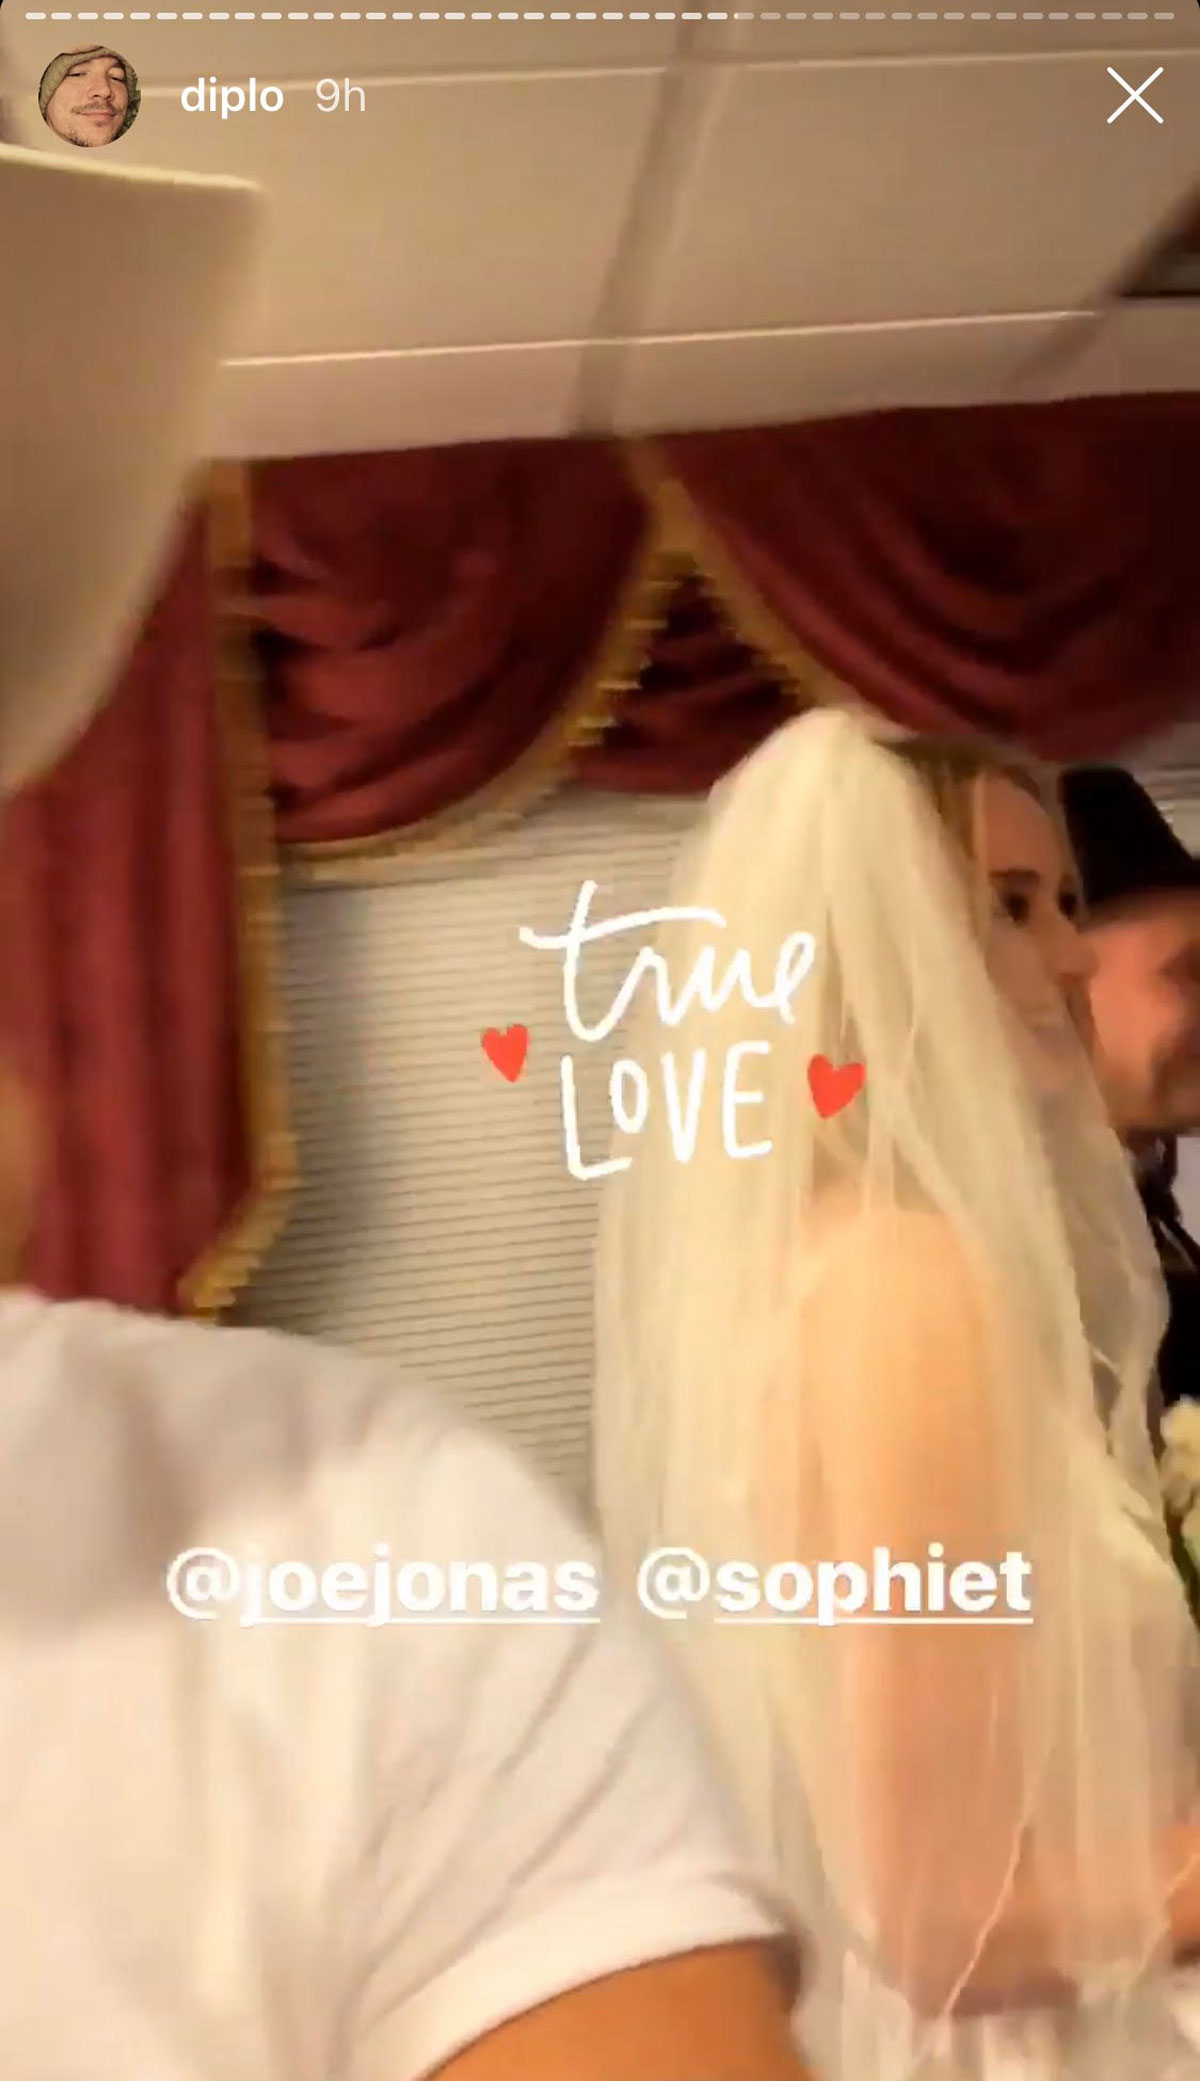 Sophie Turner and Joe Jonas' France wedding: All the inside